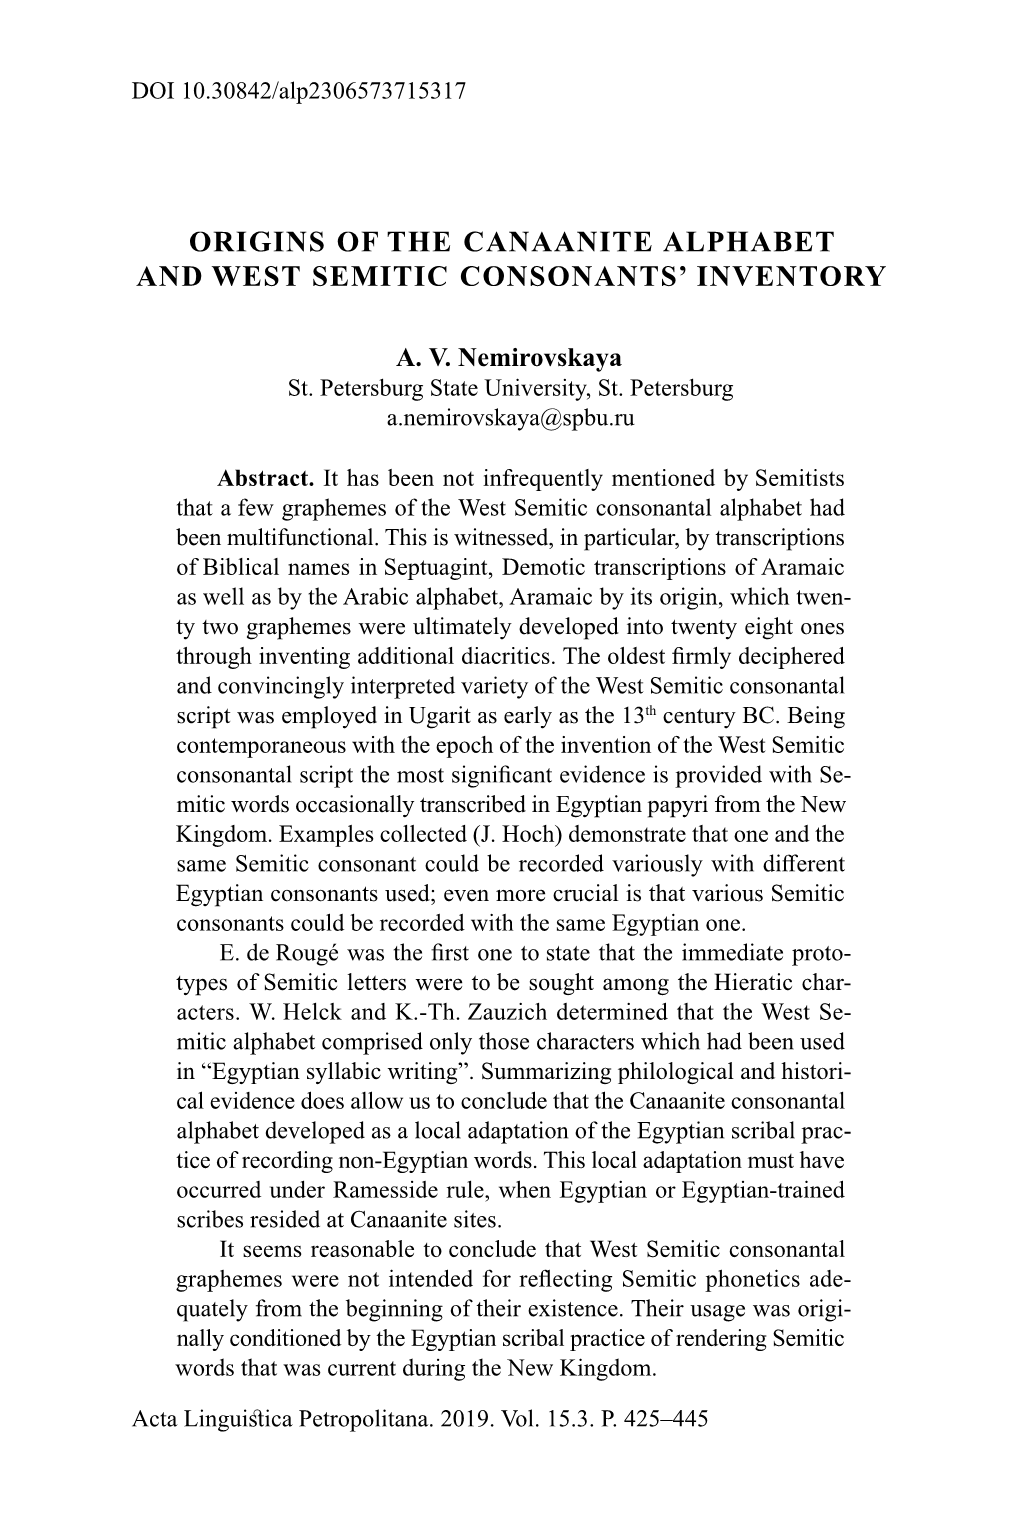 Origins of the Canaanite Alphabet and West Semitic Consonants' Inventory